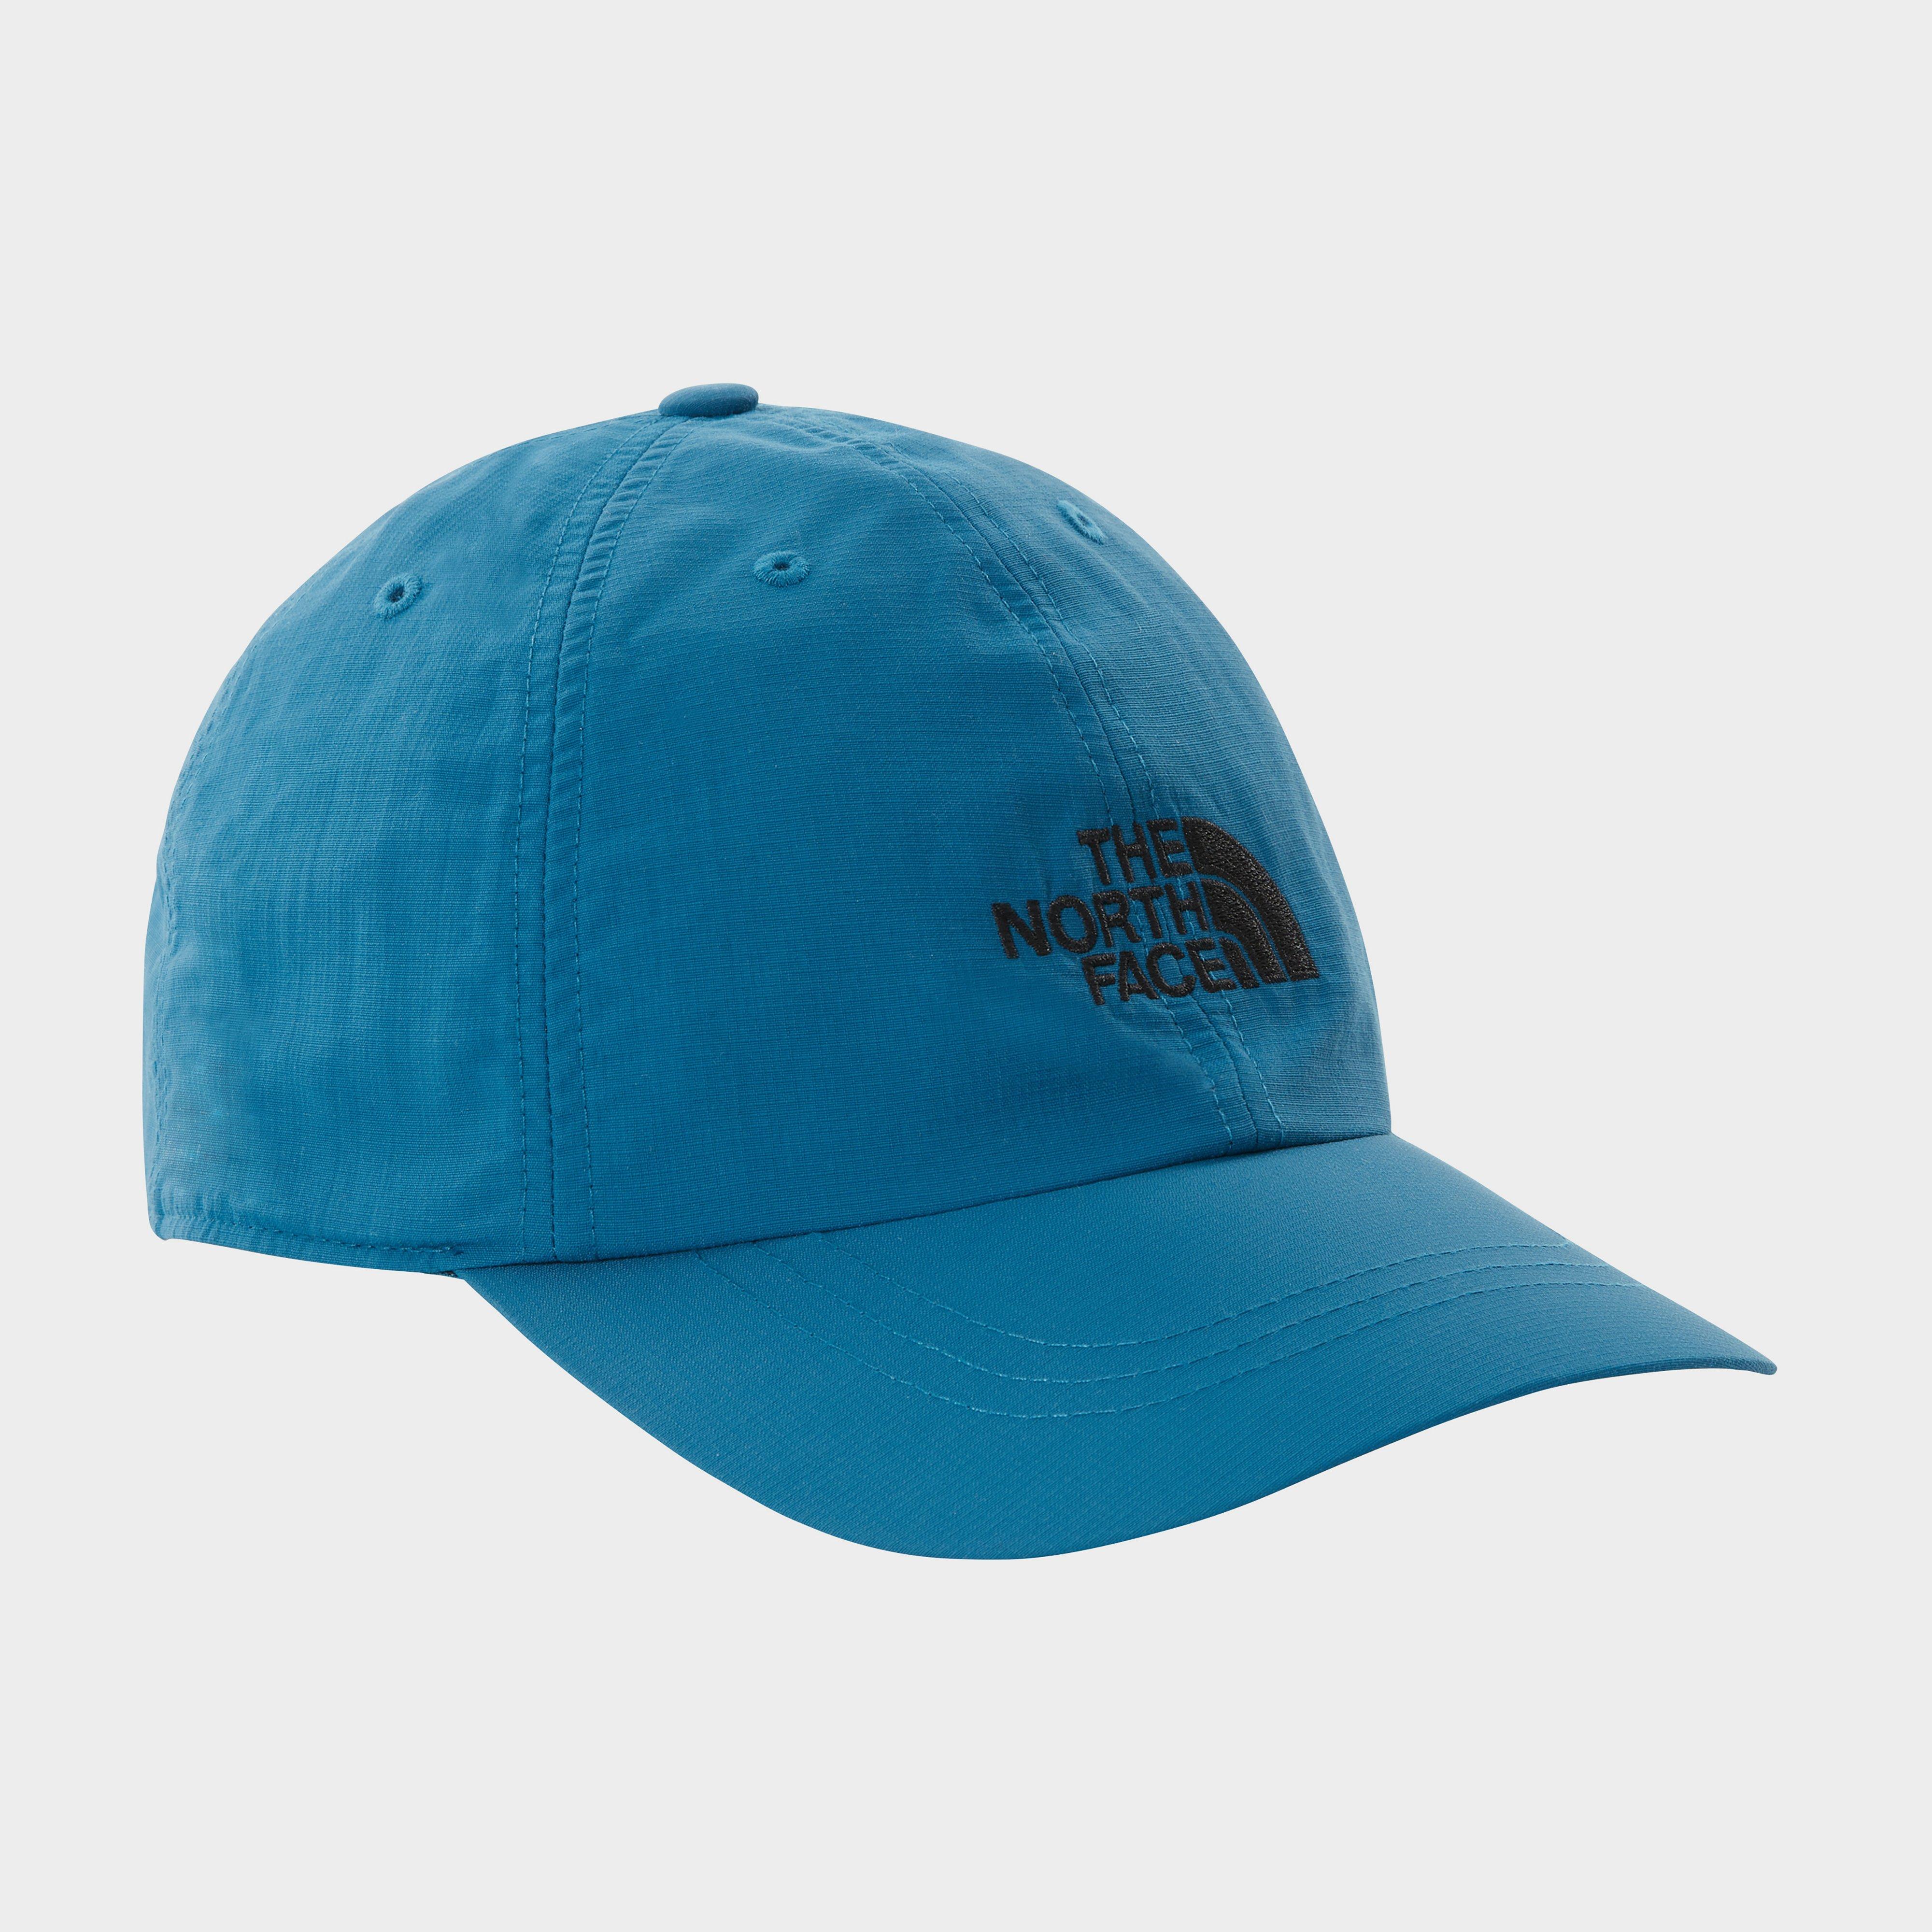 The North Face Mens Horizon Mesh Cap - Blue/blu  Blue/blu